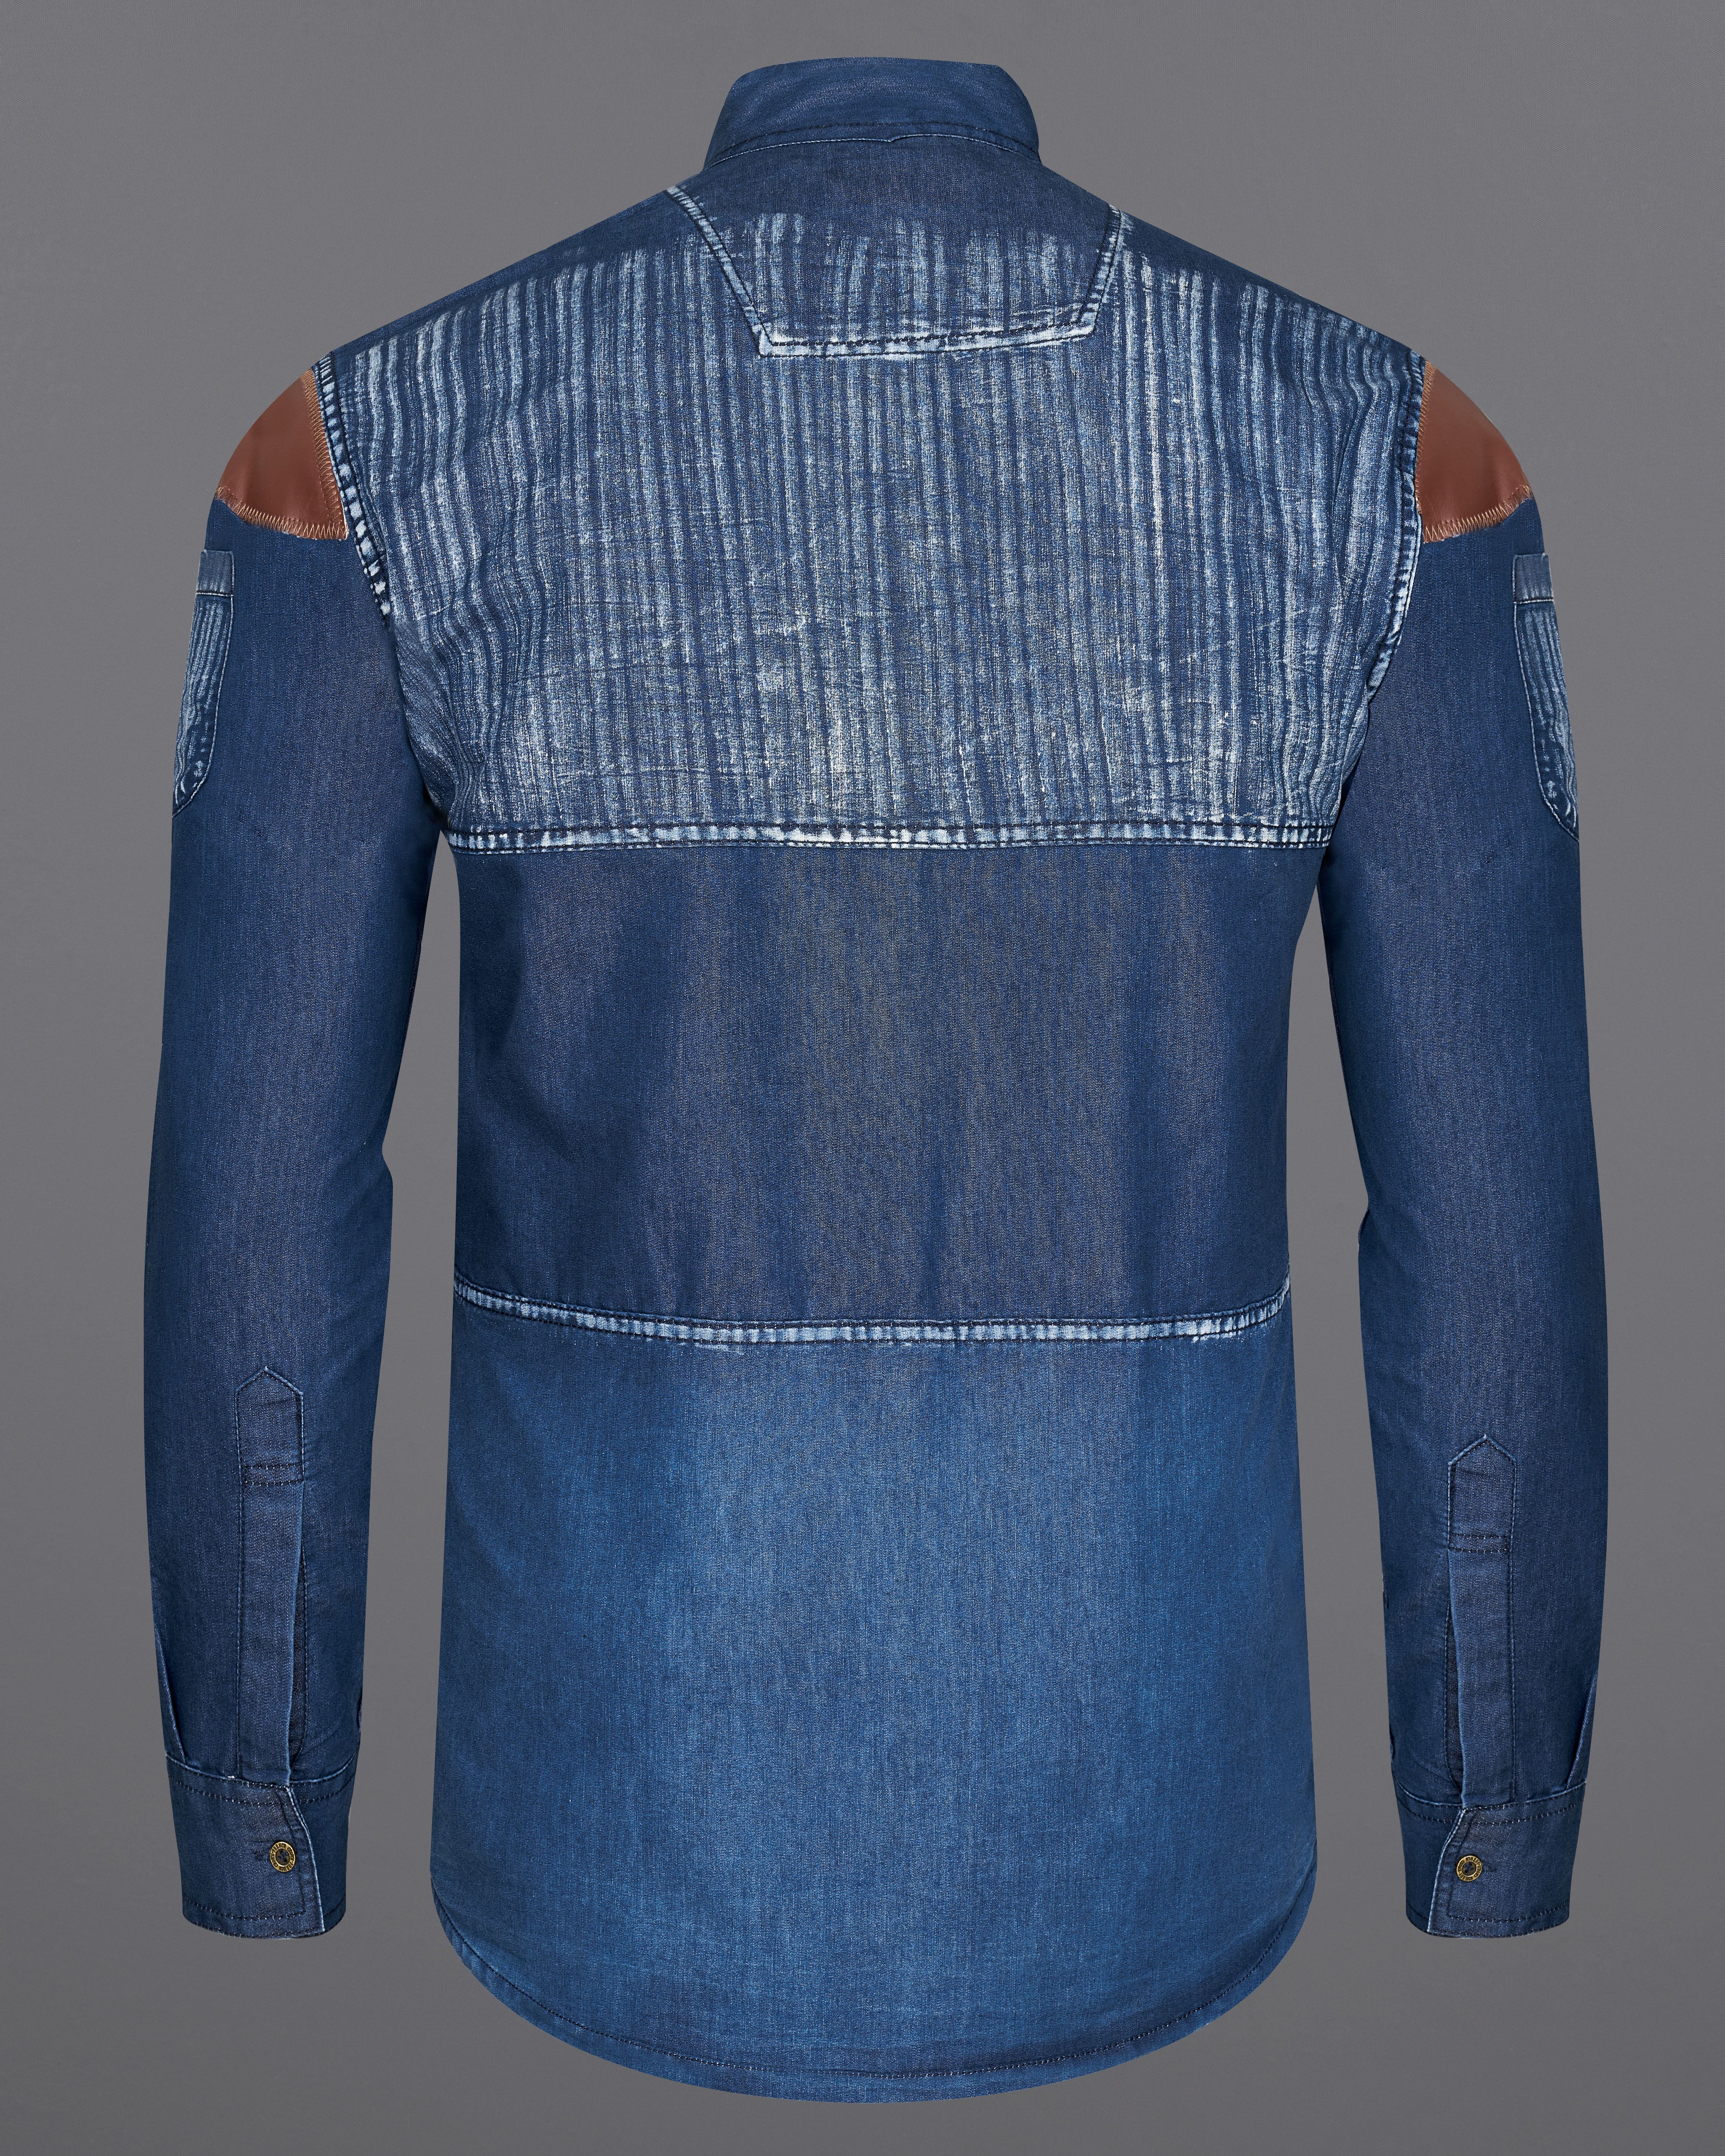 Tuna with Bunting Blue Denim Designer Shirt With Leather Patch Work | Men  fashion casual shirts, Blue denim shirt, Cotton shirts for men